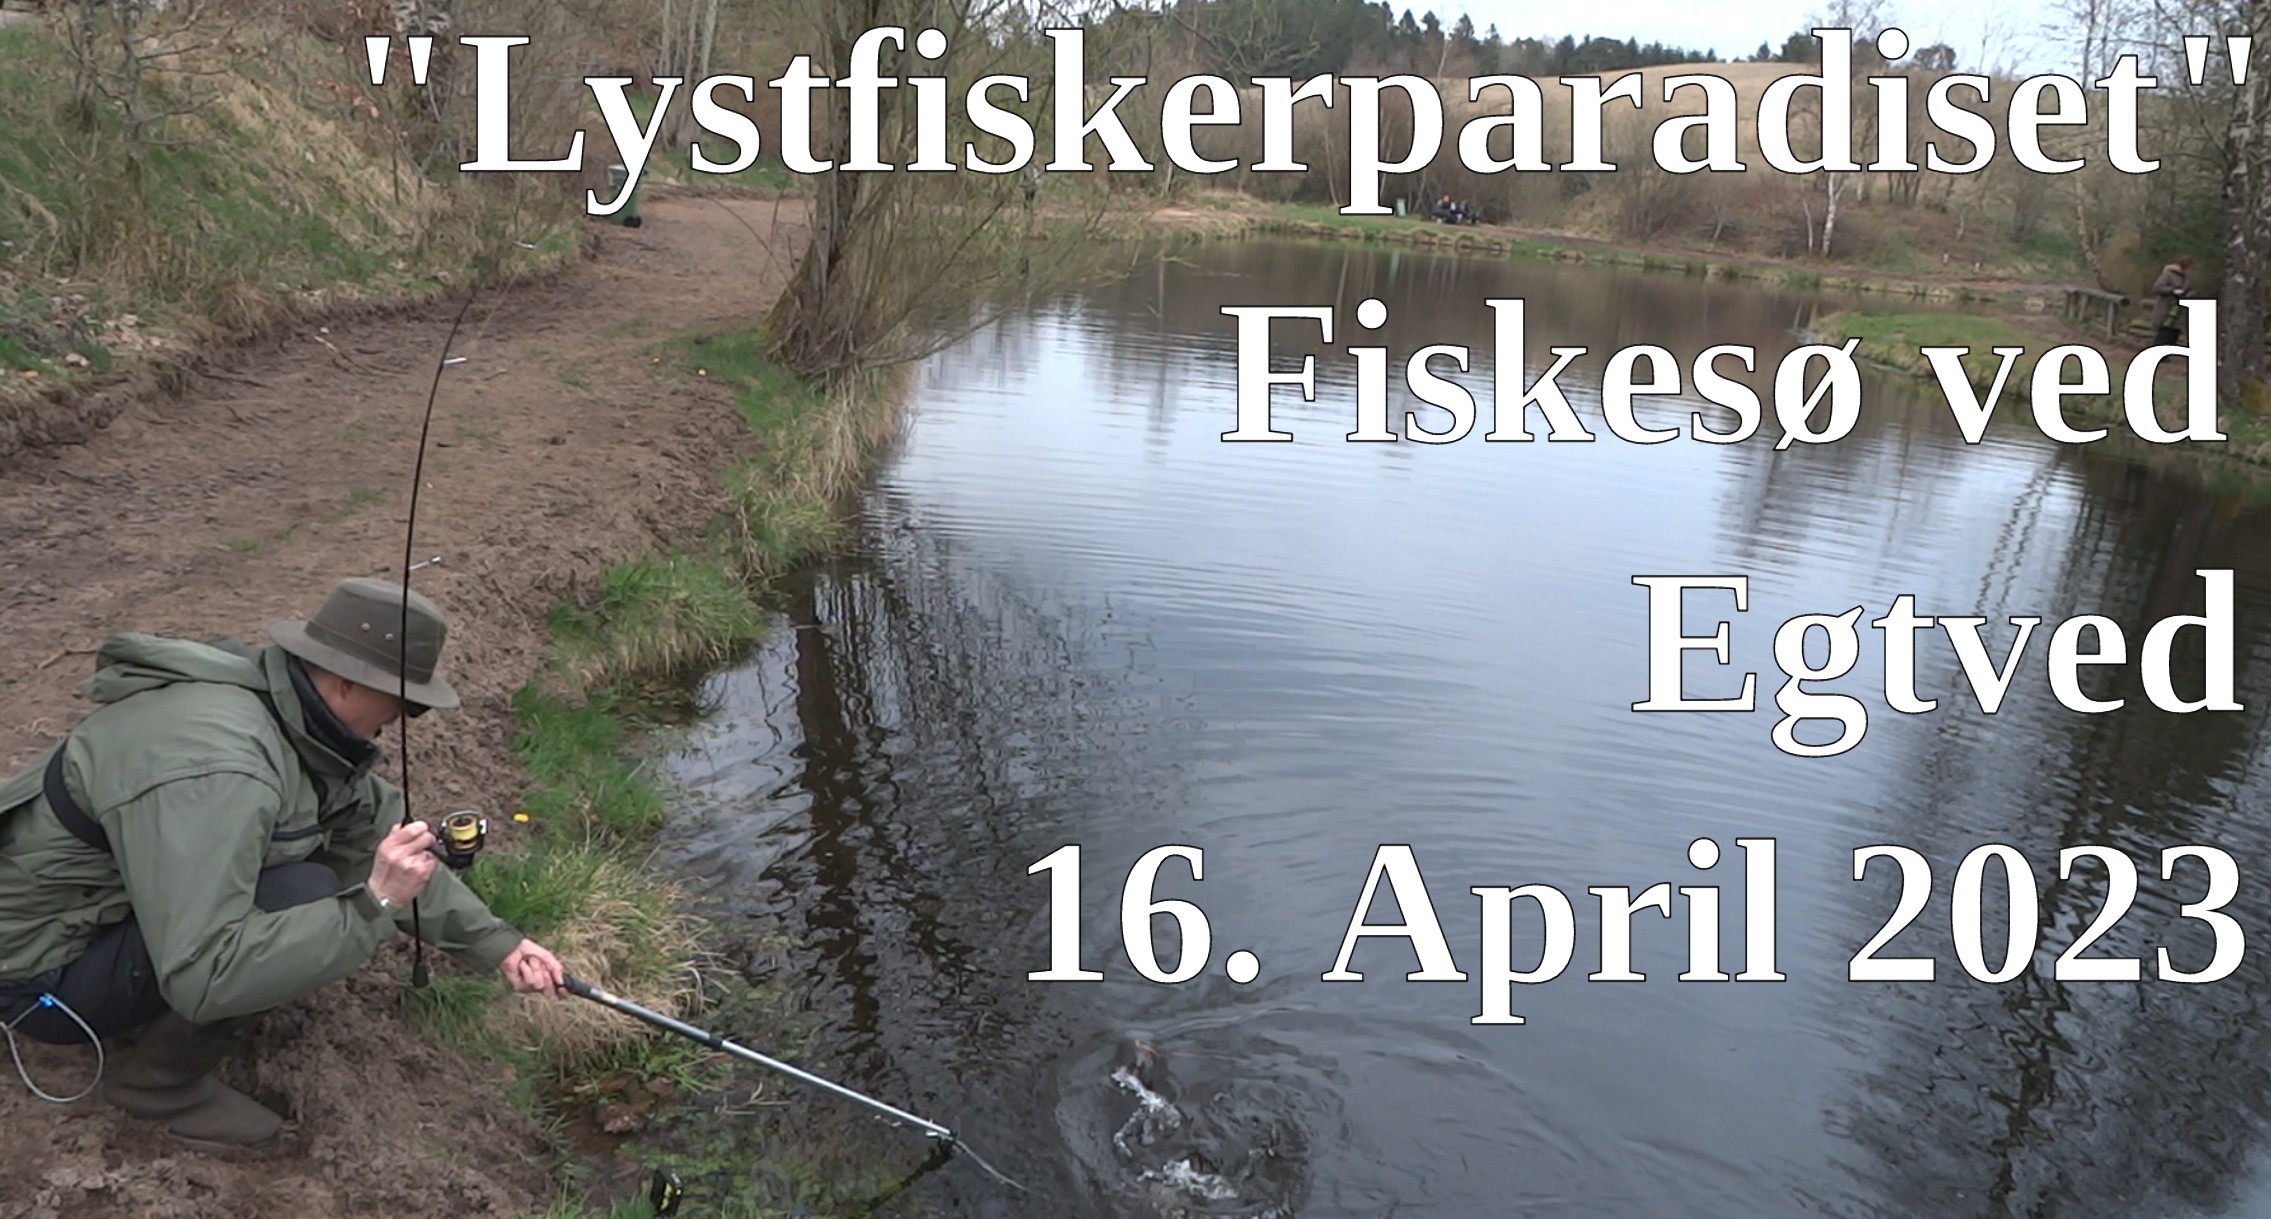 'Lystfiskerparadiset' | Fiskesø ved Egtved | 2023-04-16